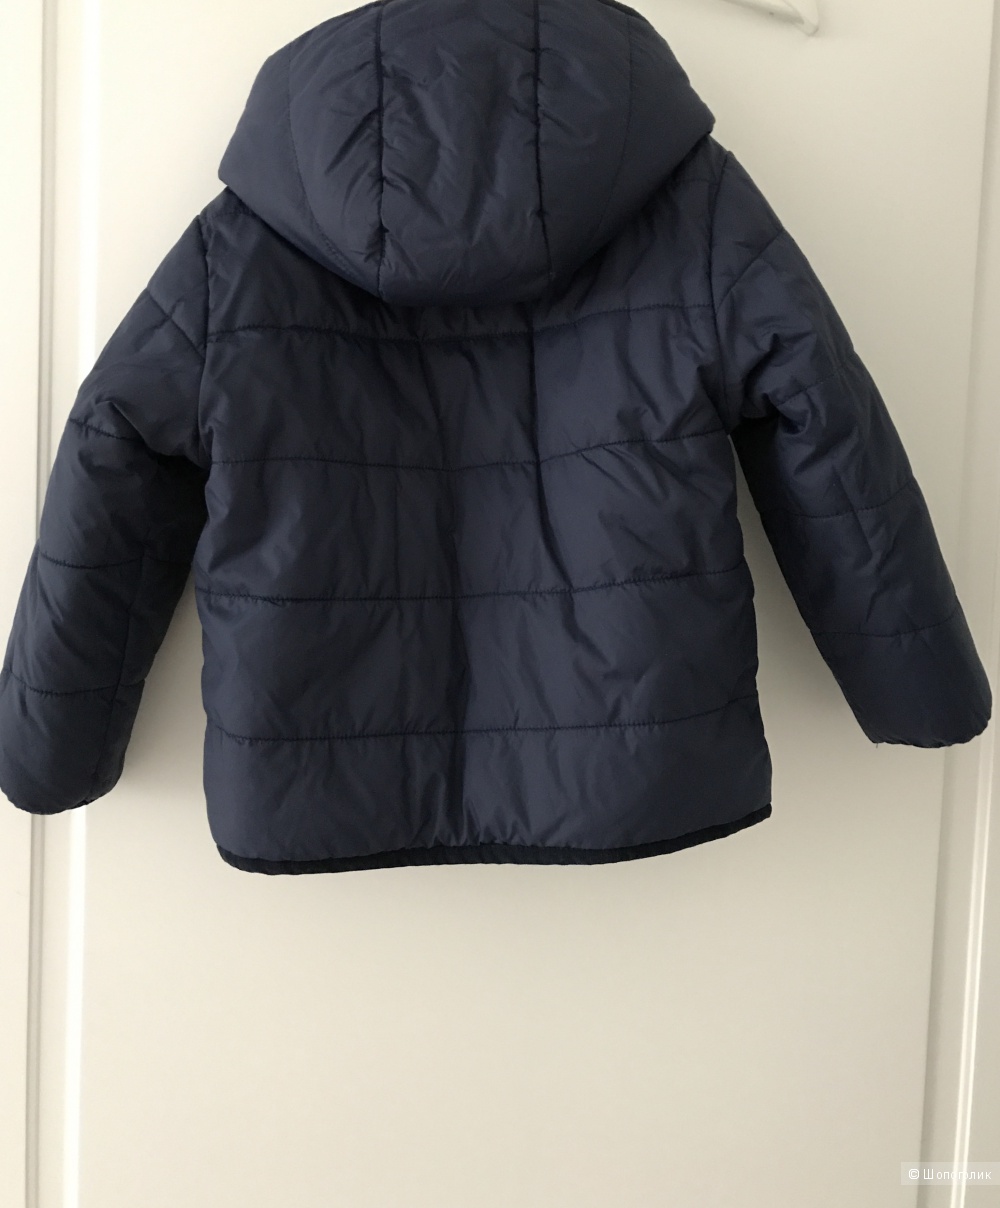 Двусторонняя куртка для мальчика Dirkbikkembergs размер 2A